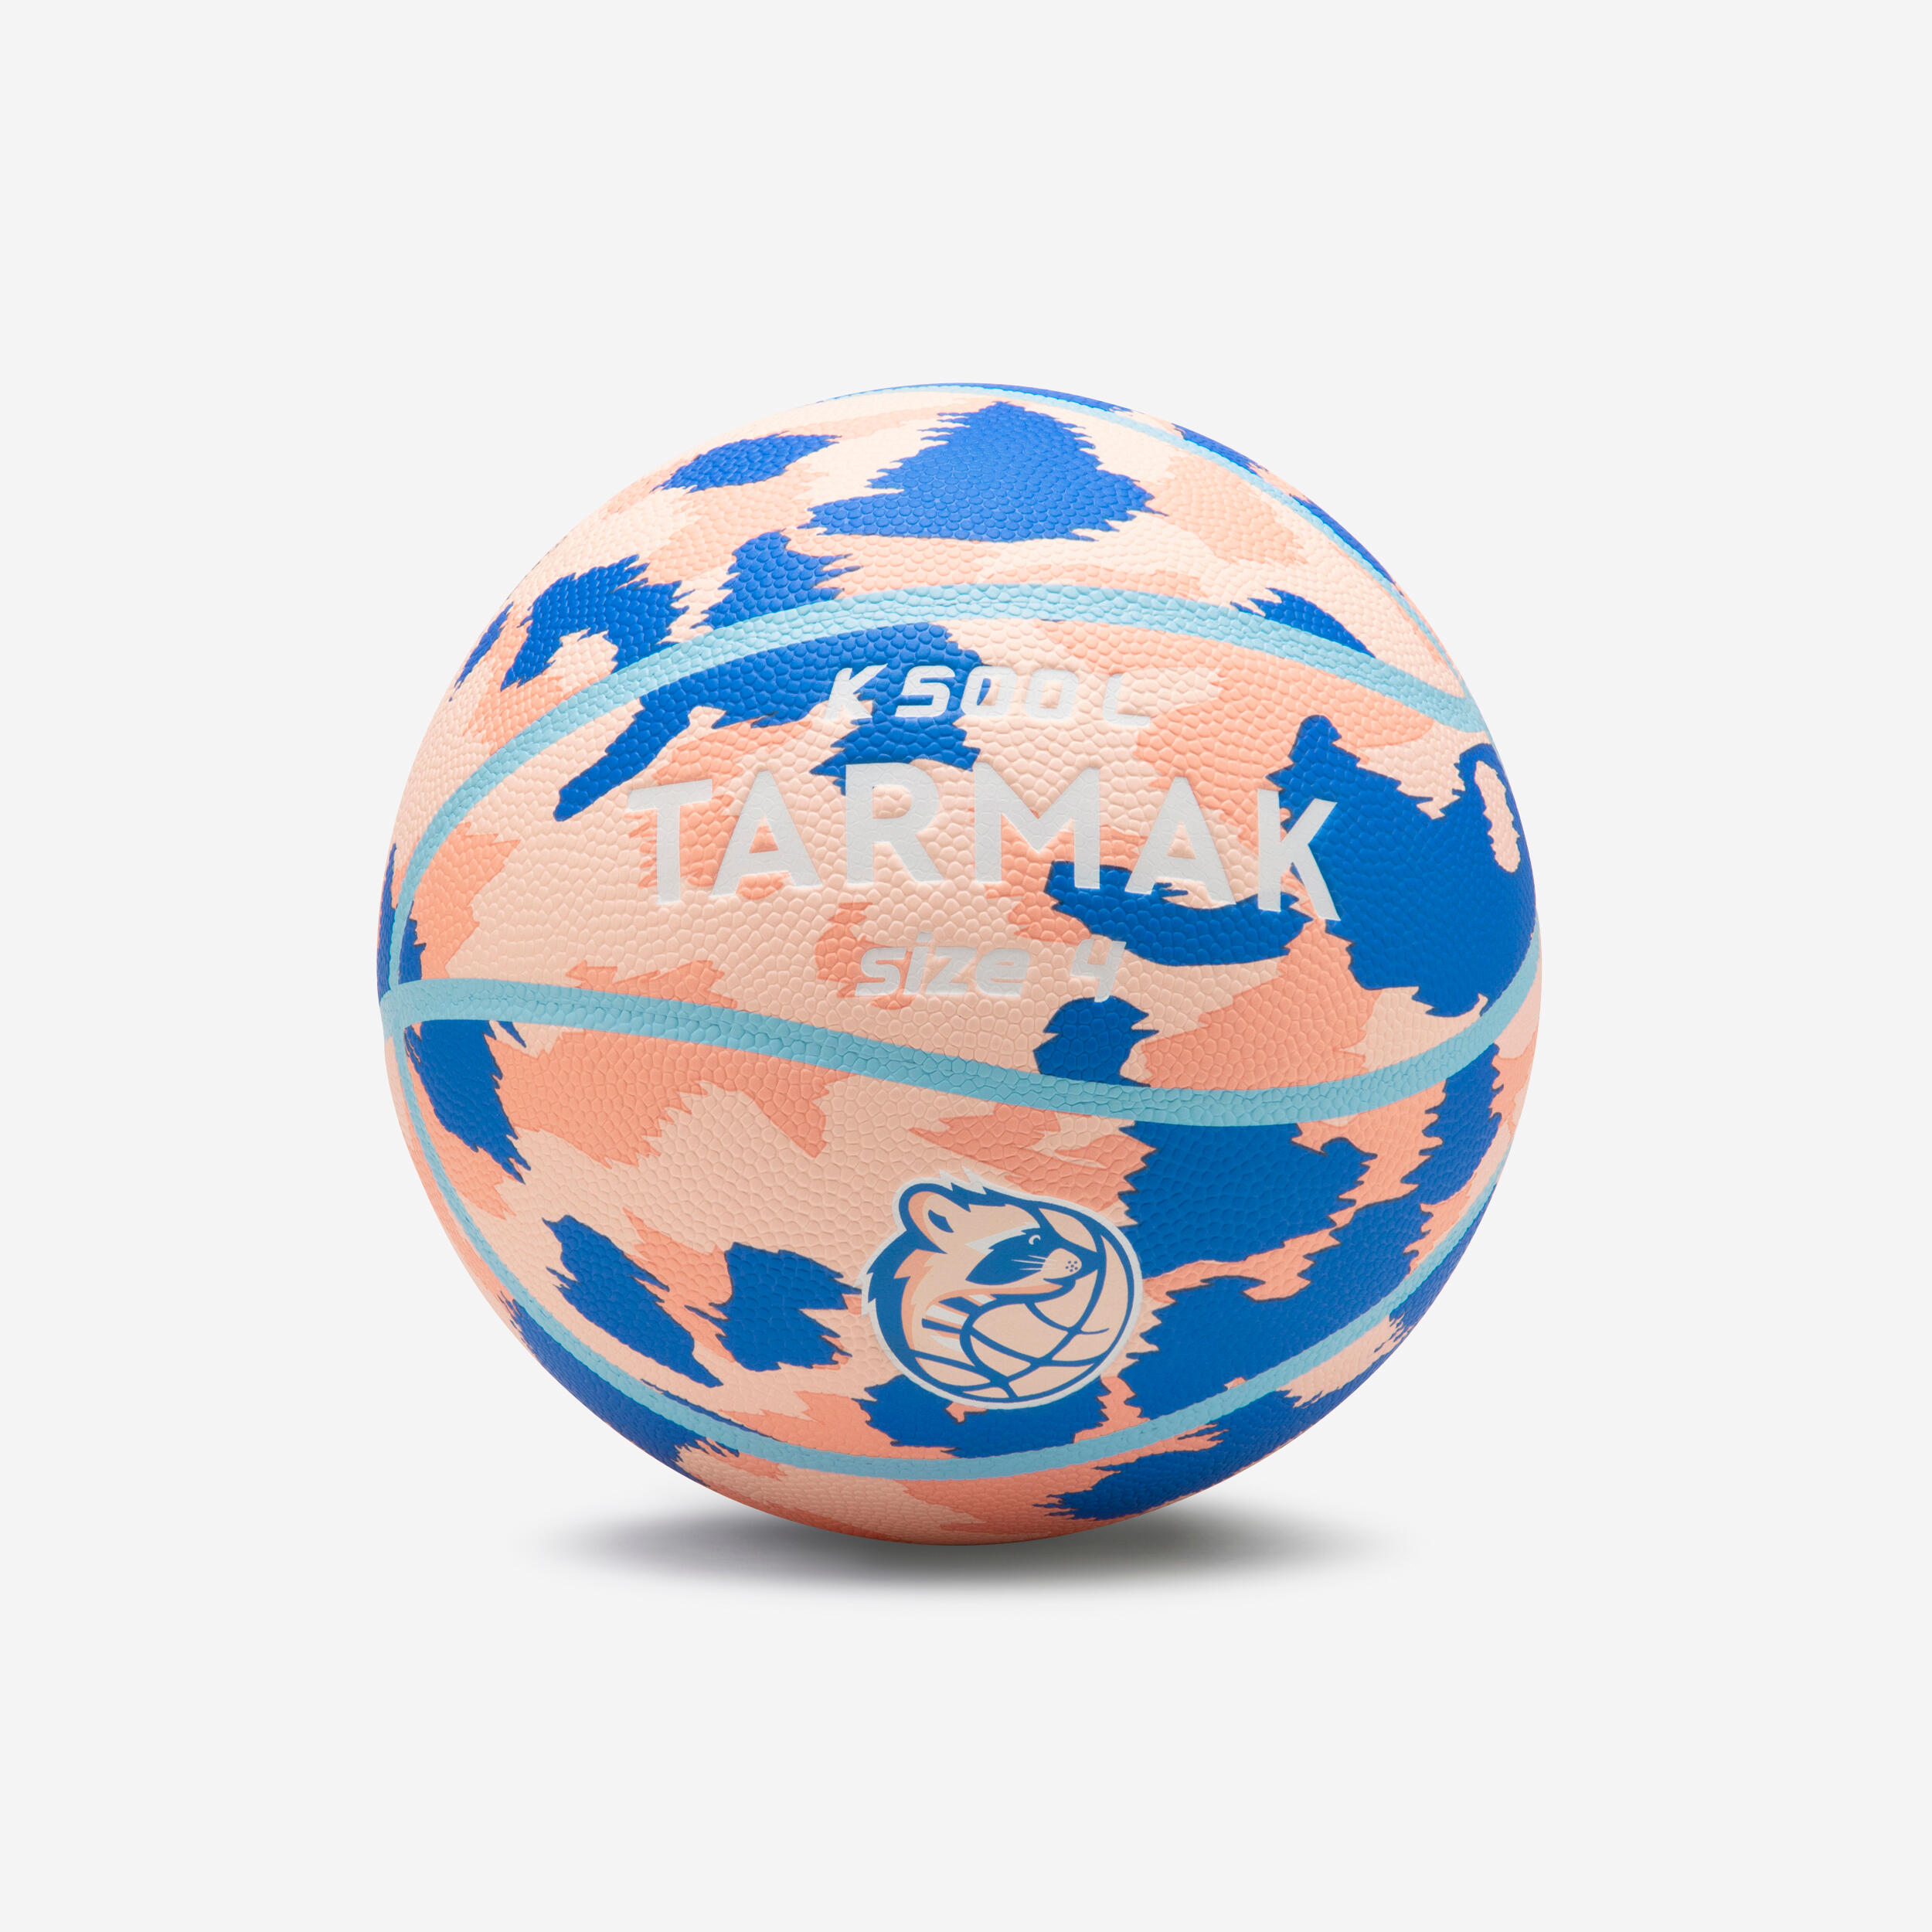 TARMAK Ballon De Basketball Taille 4 Enfant - K500 Rose Bleu